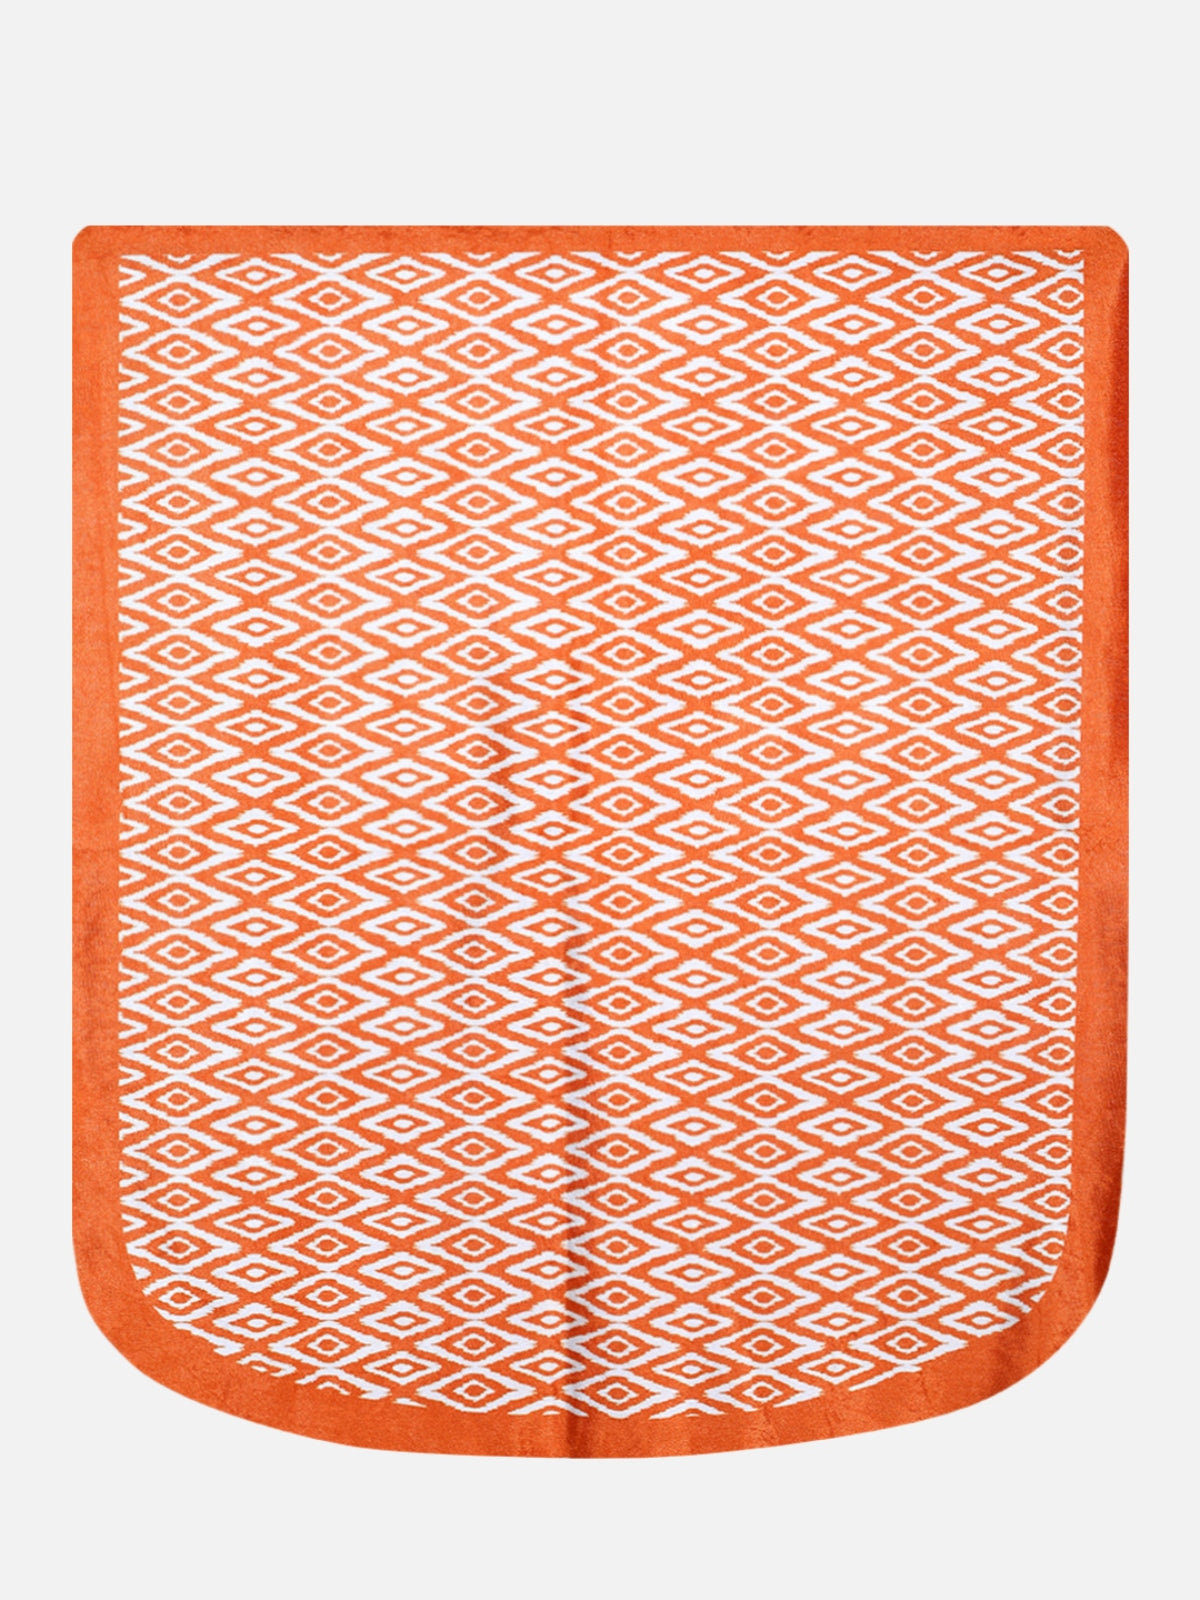 6-Pieces Orange Woven Design 5-Seater Sofa Covers